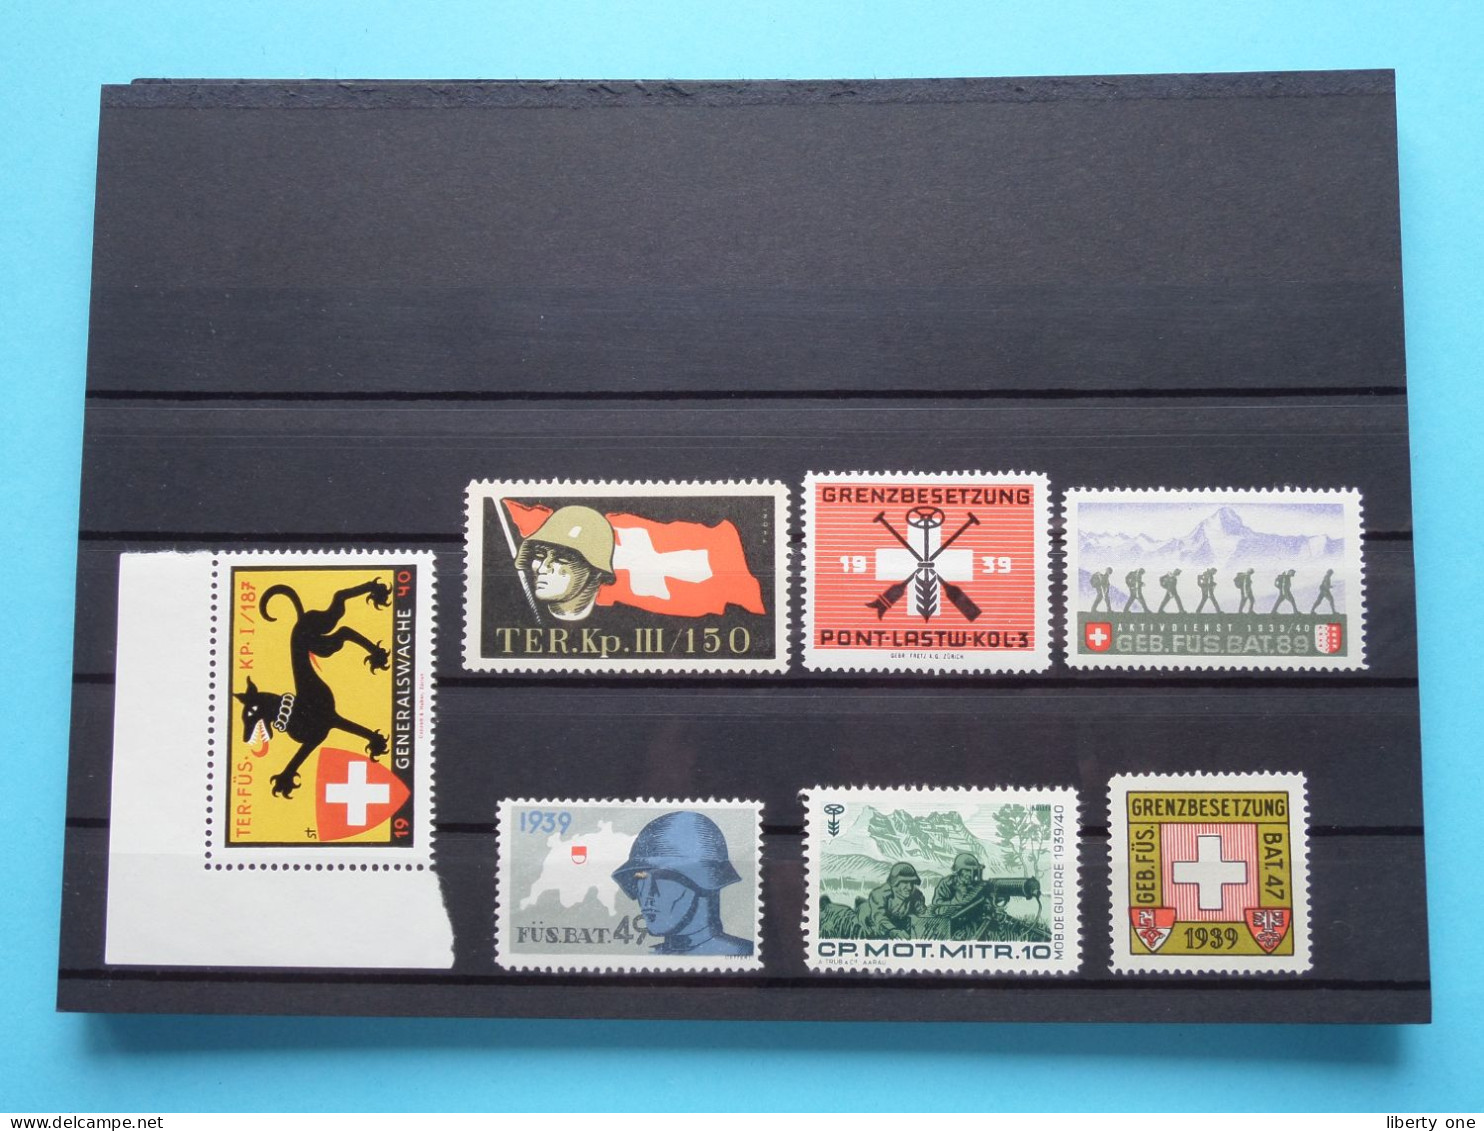 Lotje >> Sluitzegel Timbres-Vignettes Picture Stamp Verschlussmarken ( What You See Is What You Get ) La SUISSE ! - Matasellos Generales